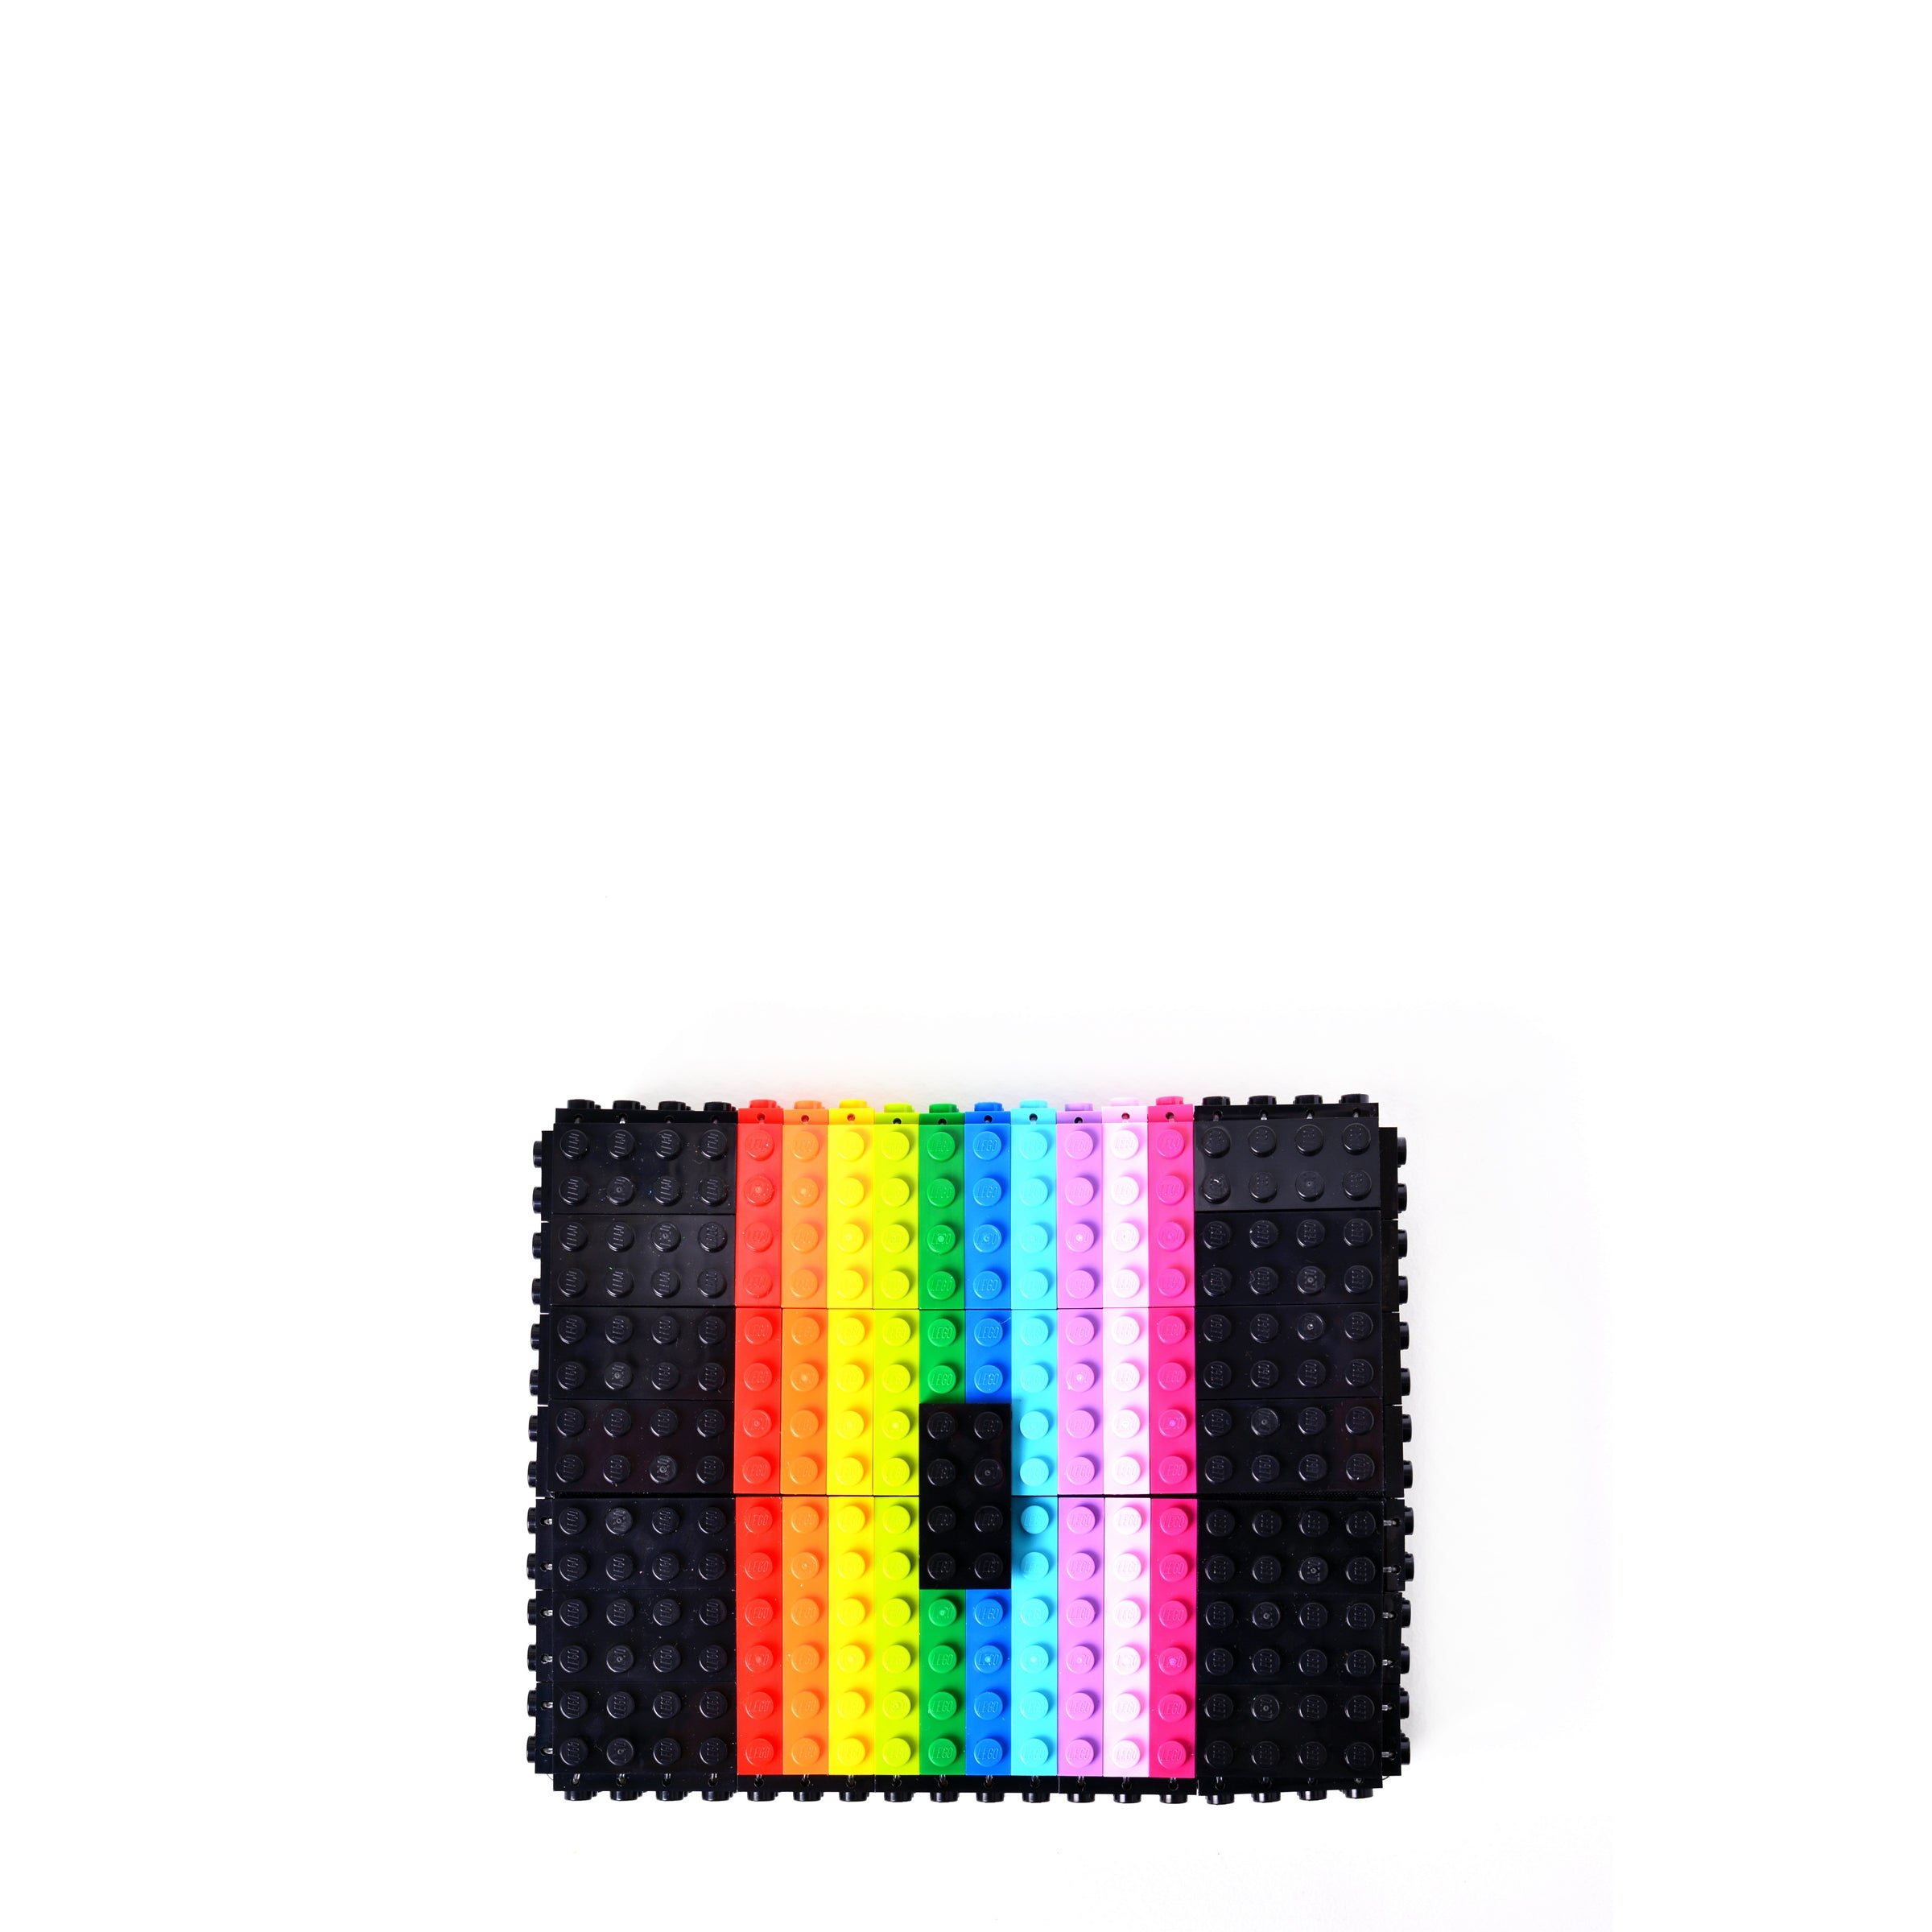 Black rainbow clutch